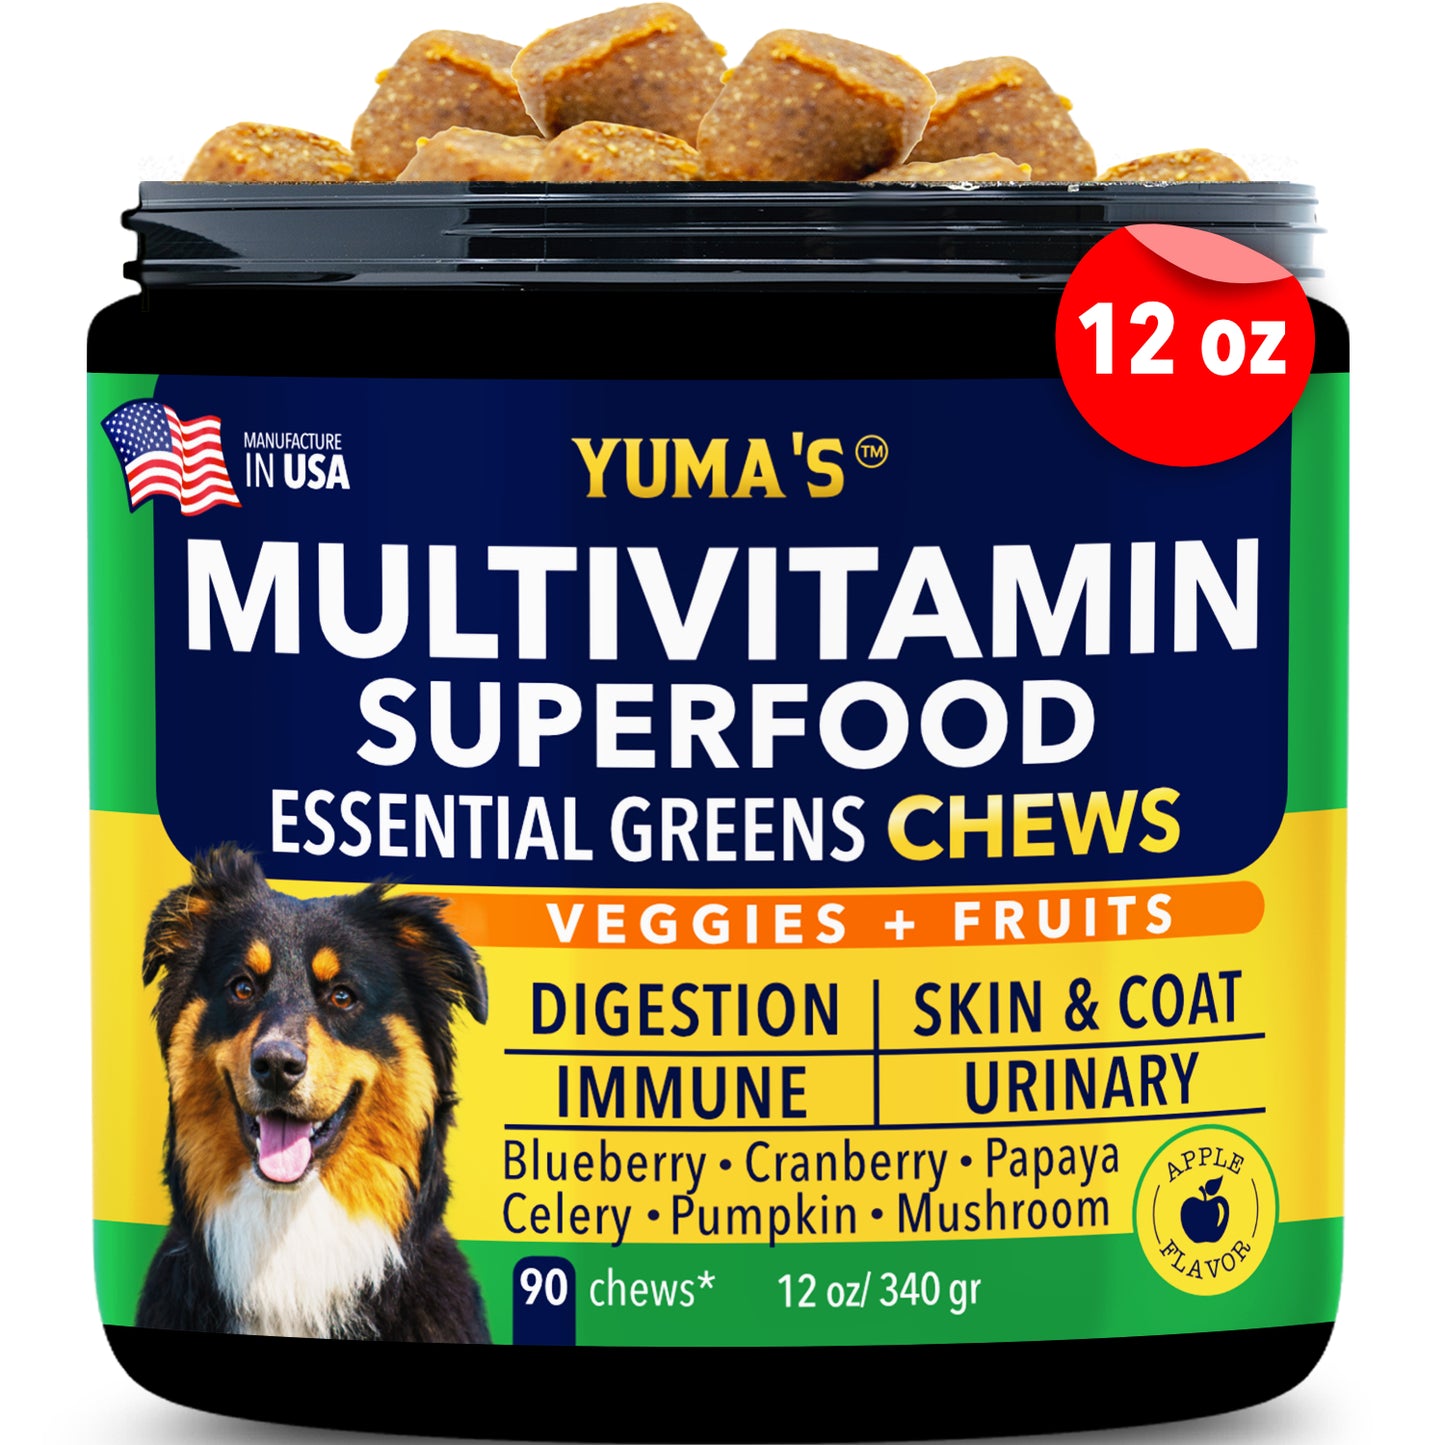 Multivitamin Superfood Veggies + Fruits